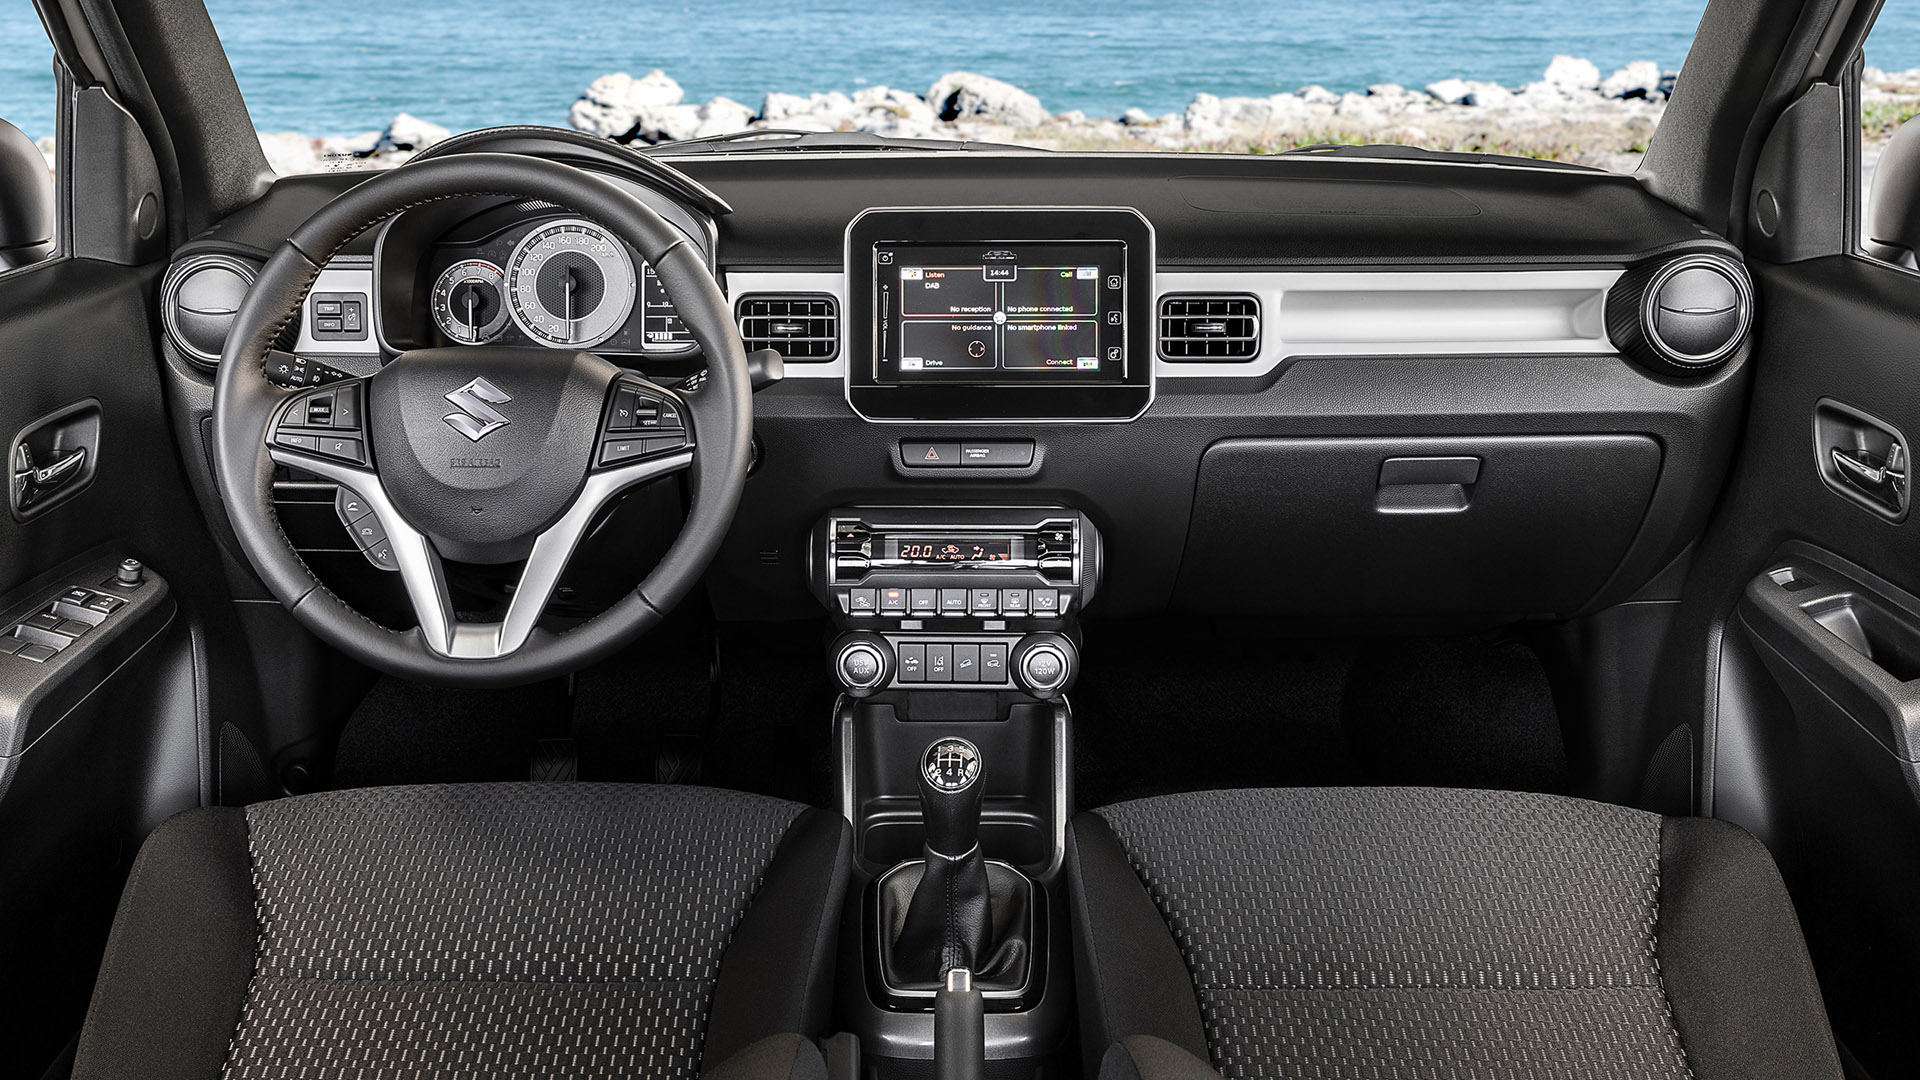 Suzuki Ignis 2020 inside